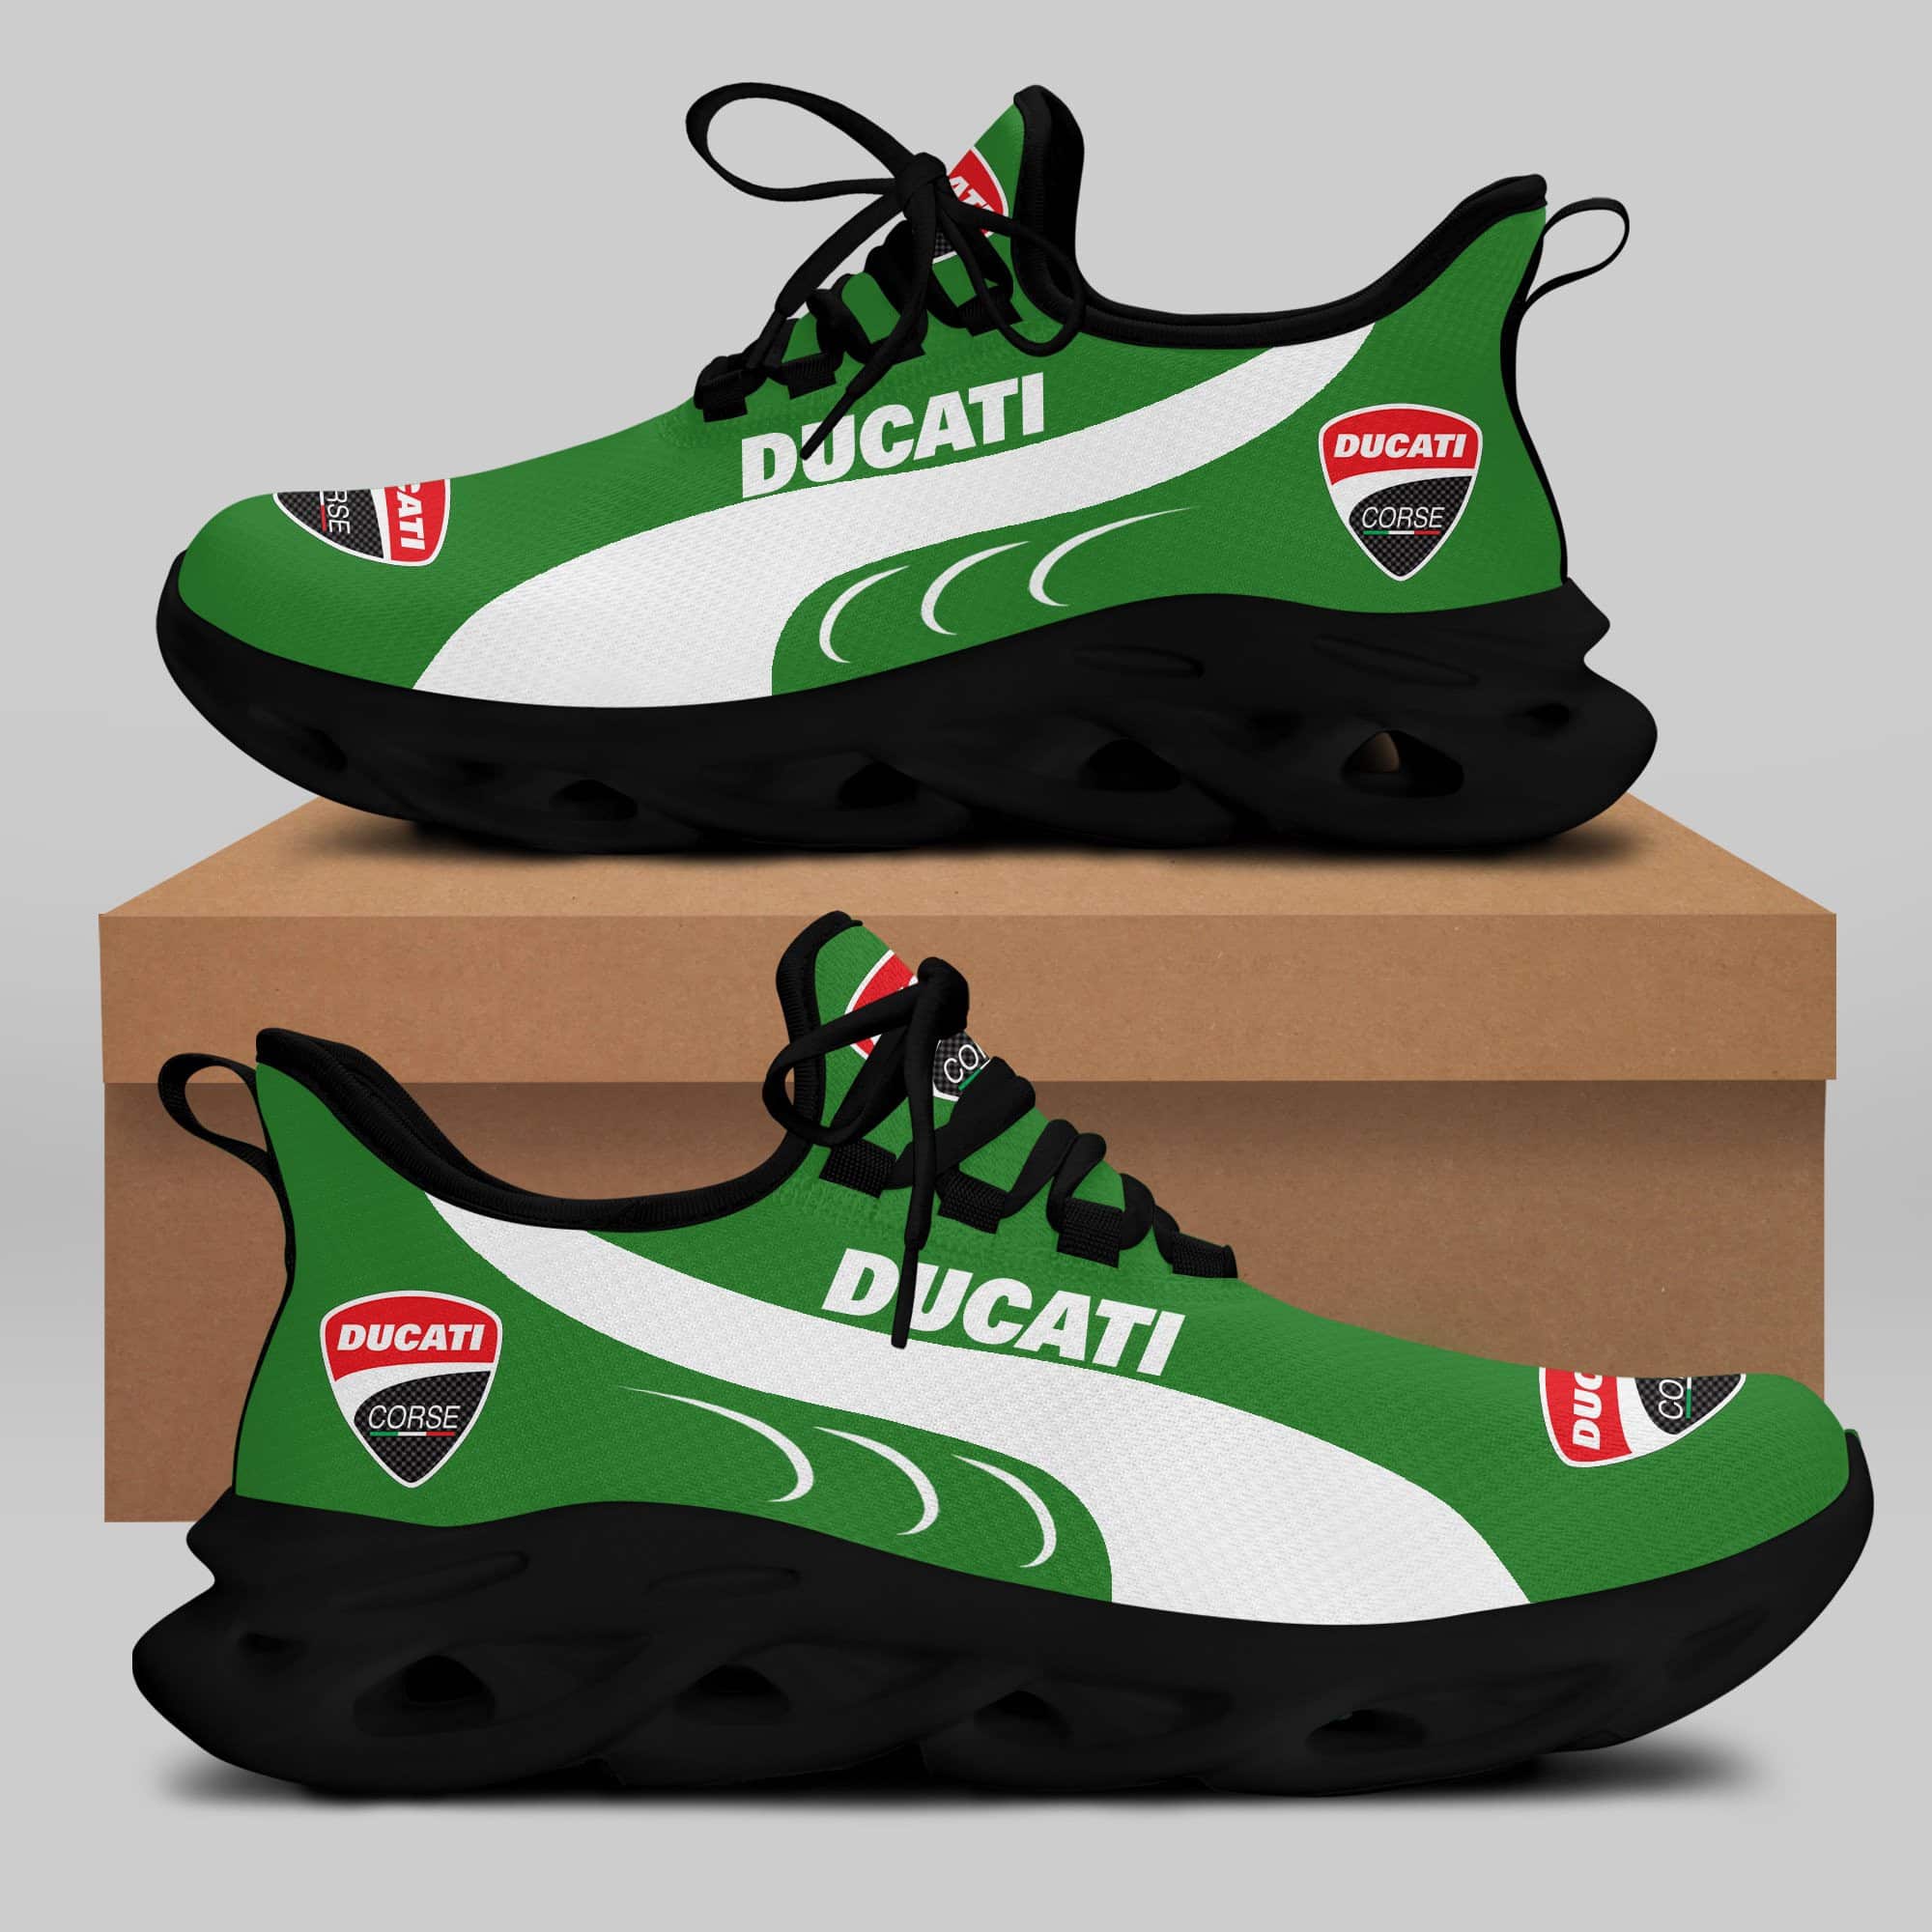 Ducati Racing Running Shoes Max Soul Shoes Sneakers Ver 65 2